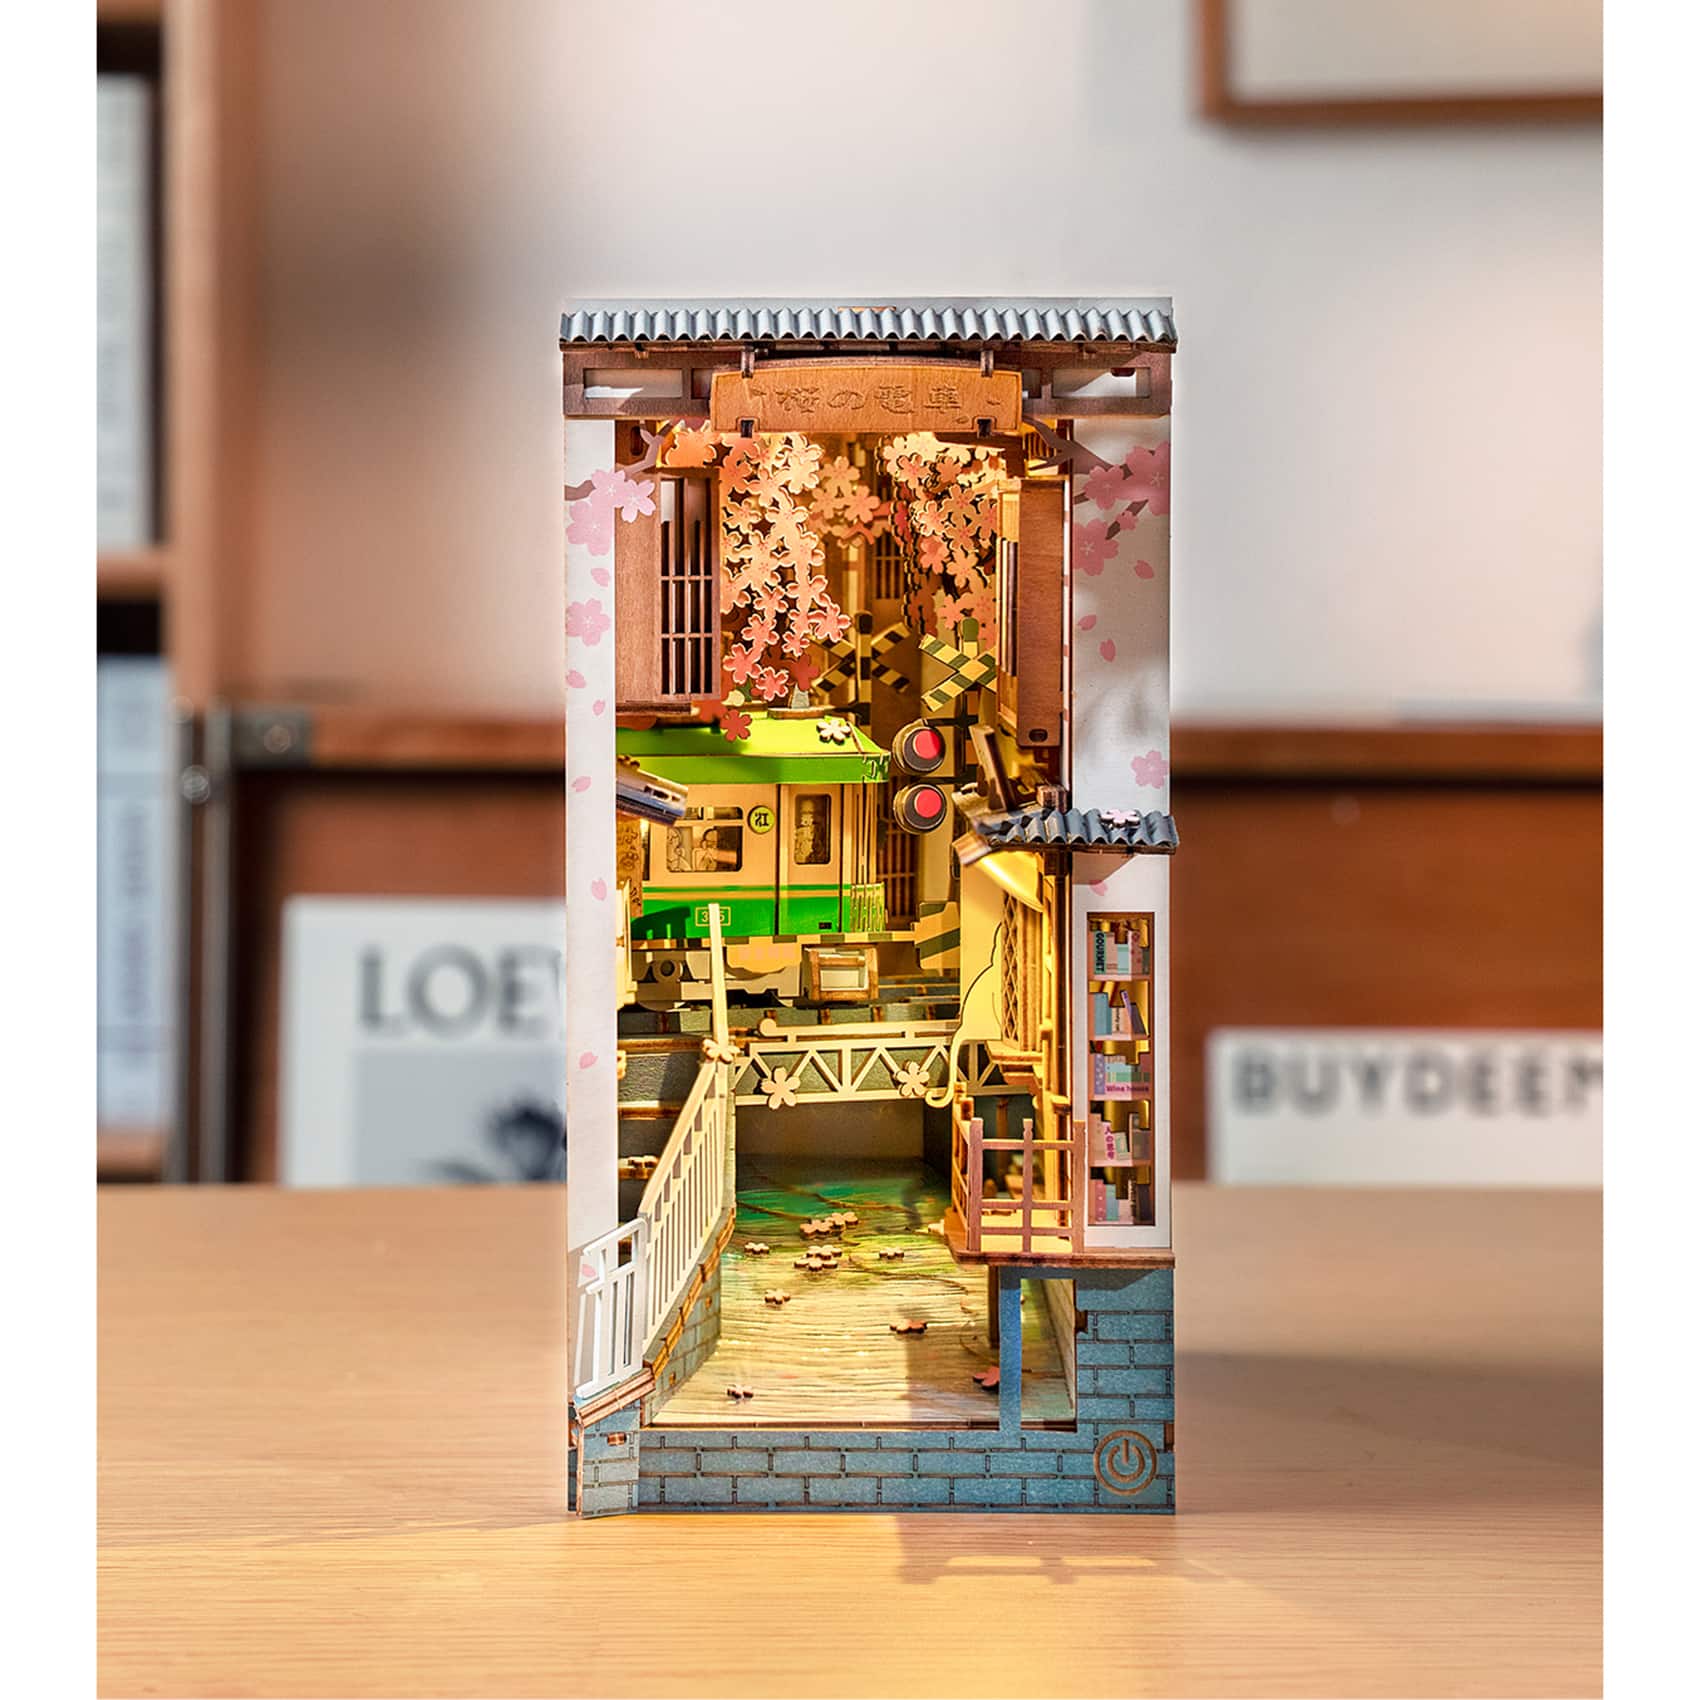 Rolife Sakura Densya Book Nook Shelf Insert DIY Miniature Kit 